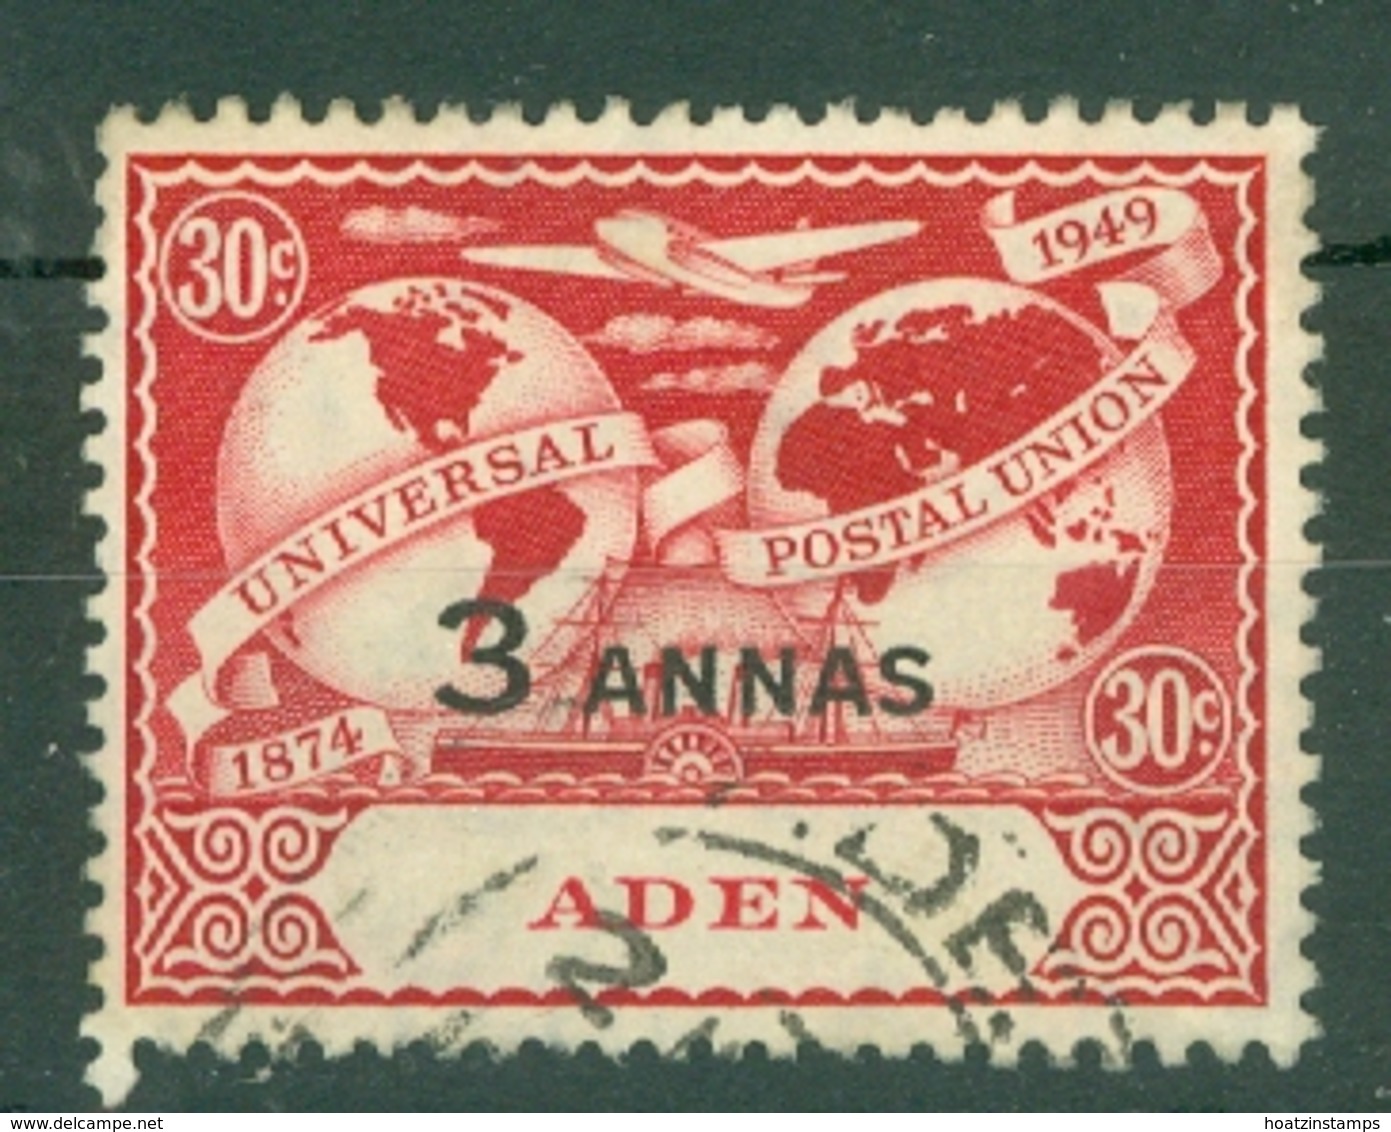 Aden: 1949   U.P.U.   SG33   3a N 30c  Used - Aden (1854-1963)